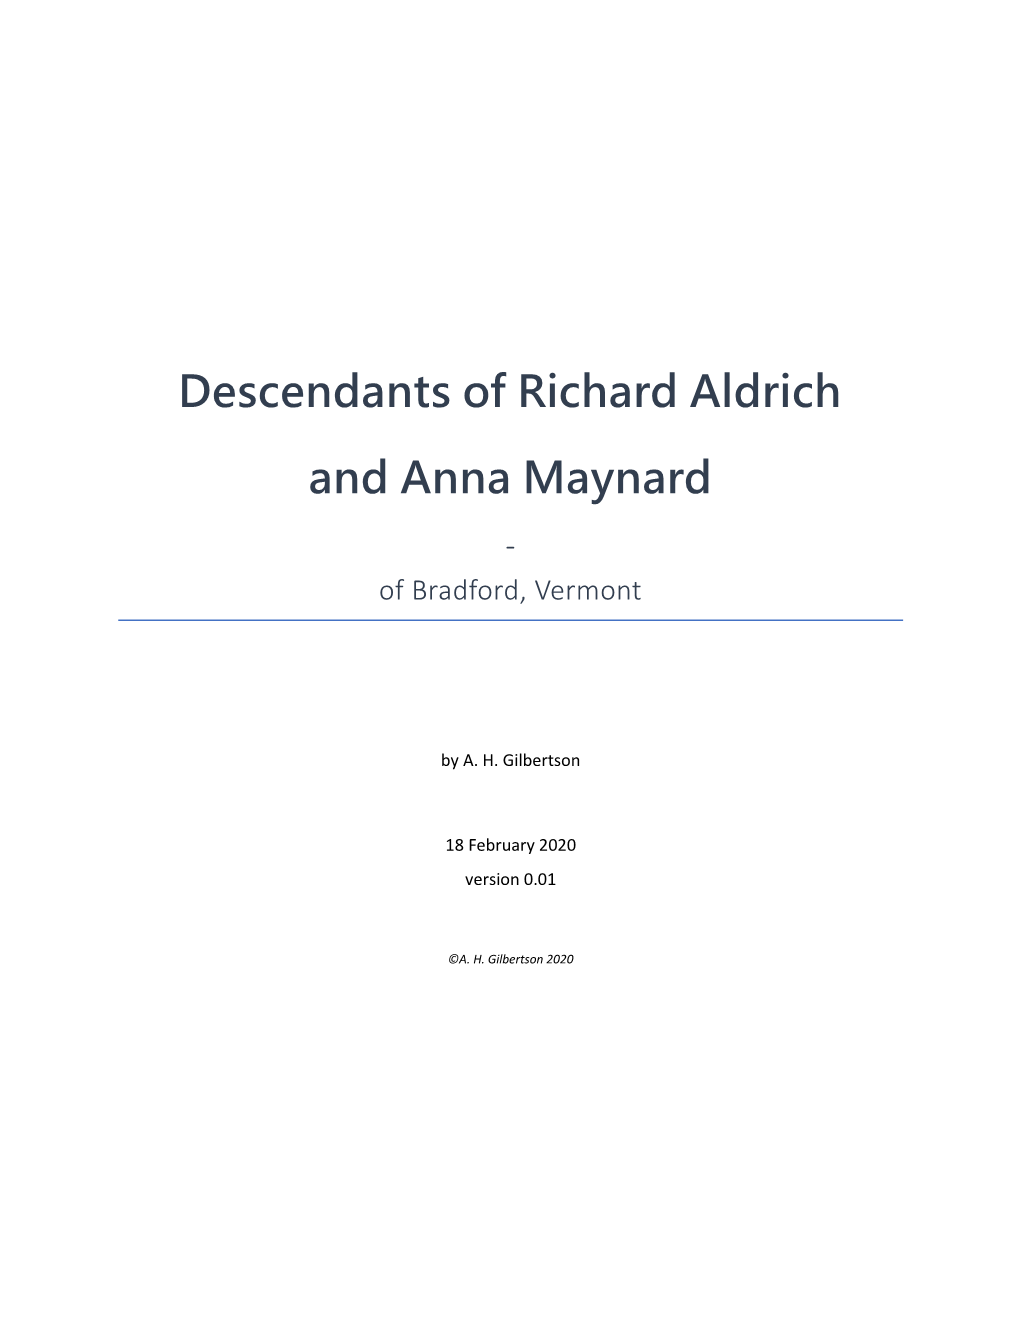 Descendants of Richard Aldrich and Anna Maynard - of Bradford, Vermont